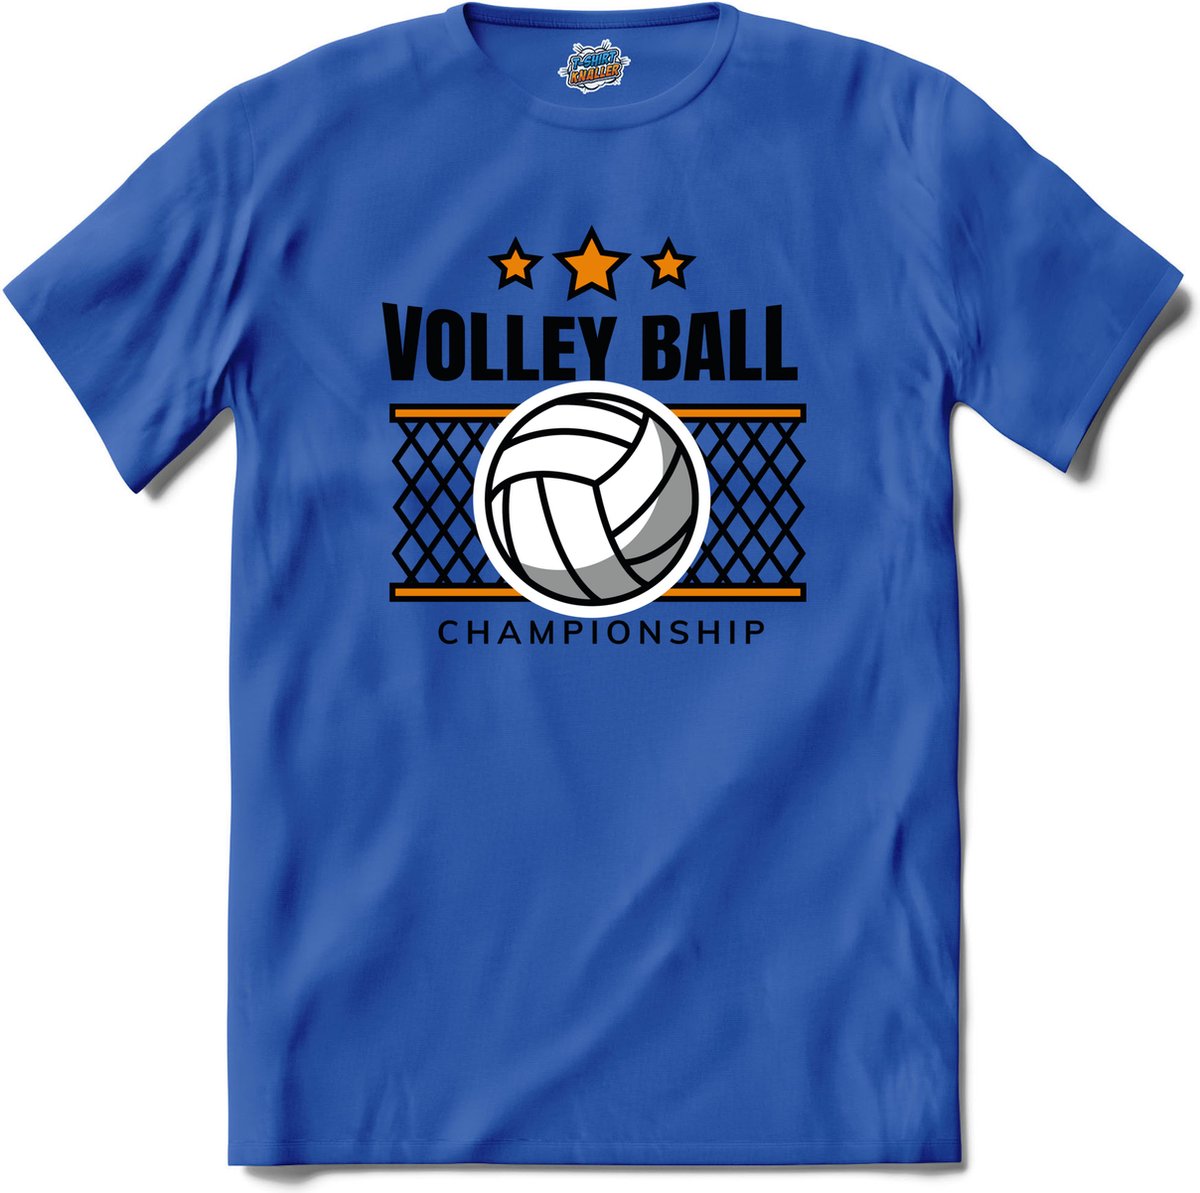 Volleybal net sport - T-Shirt - Meisjes - Royal Blue - Maat 4 jaar